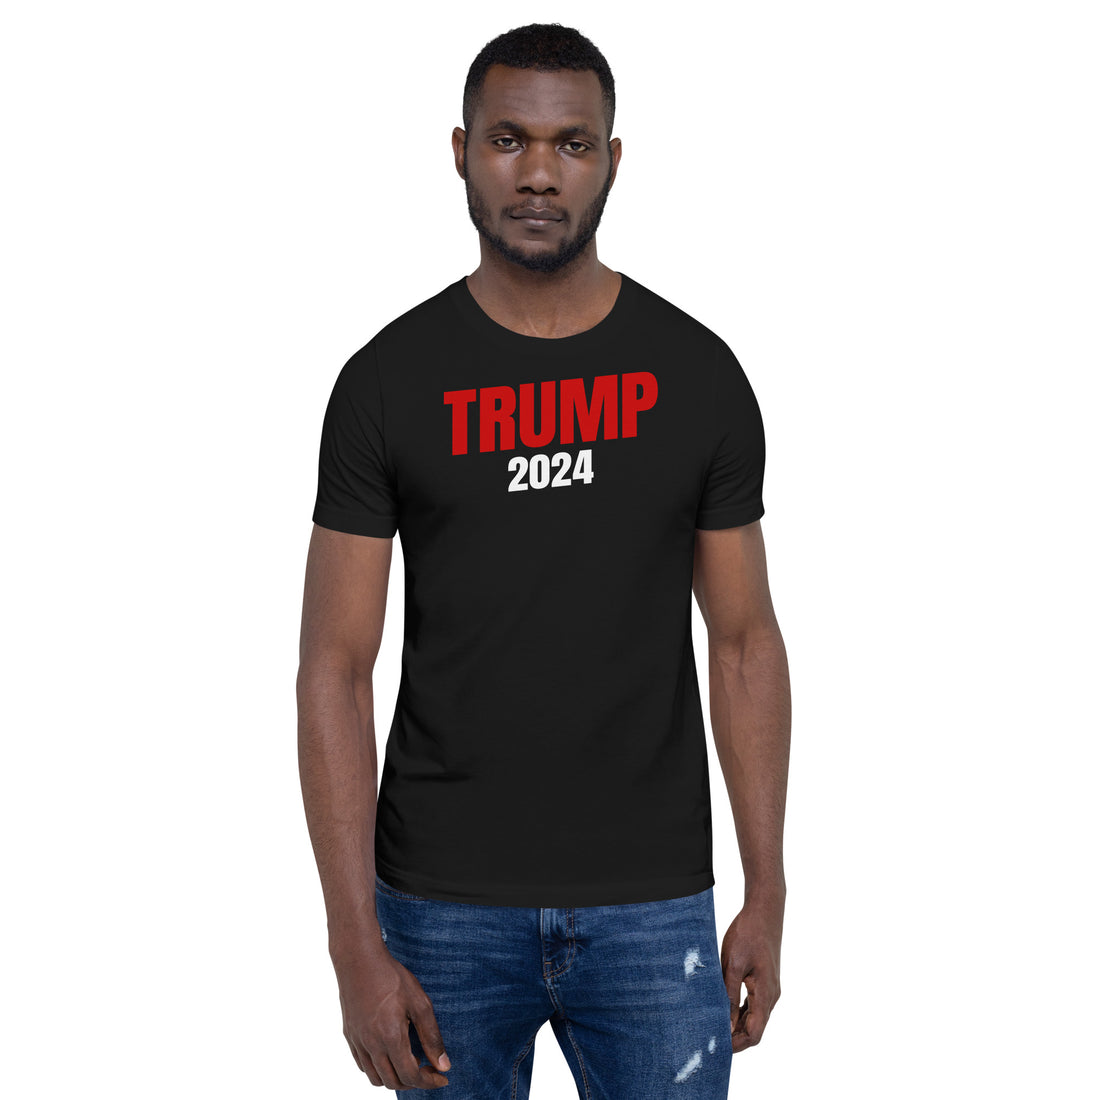 TRUMP 2024 t-shirt